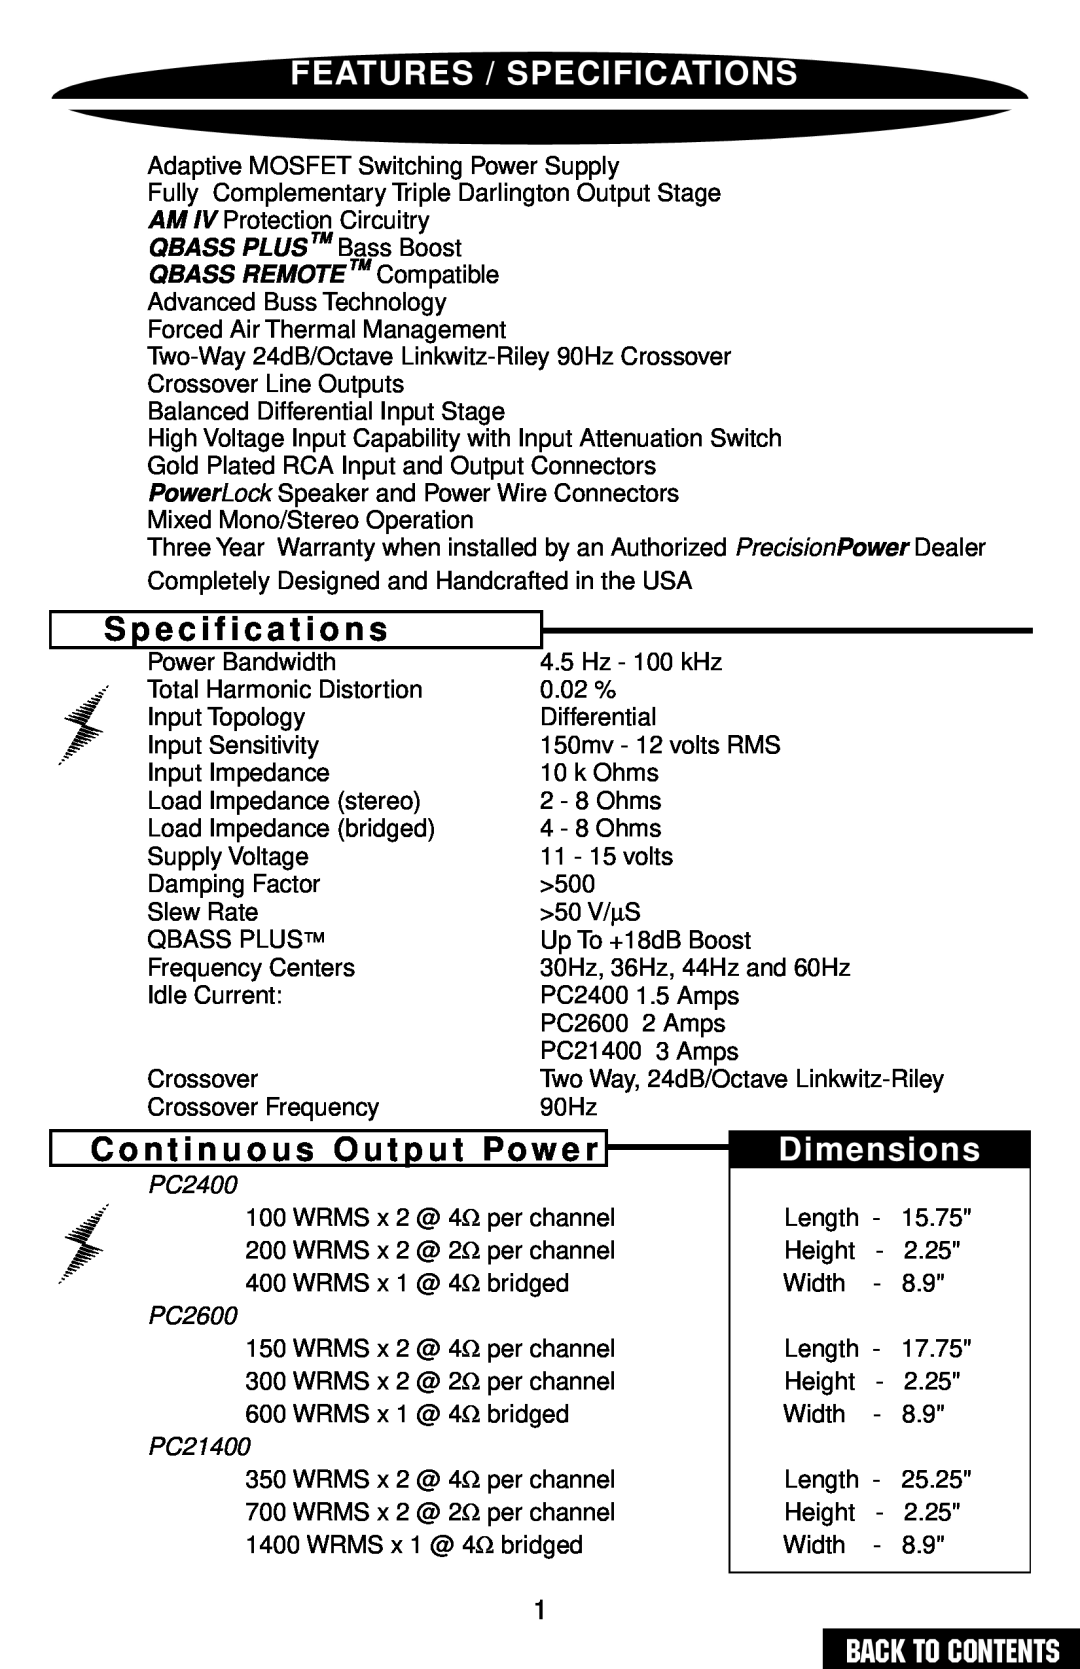 Precision Power PC2400 Features / Specifications, S p e c i f i c a t i o n s, C o n t i n u o u s O u t p u t Po w e r 